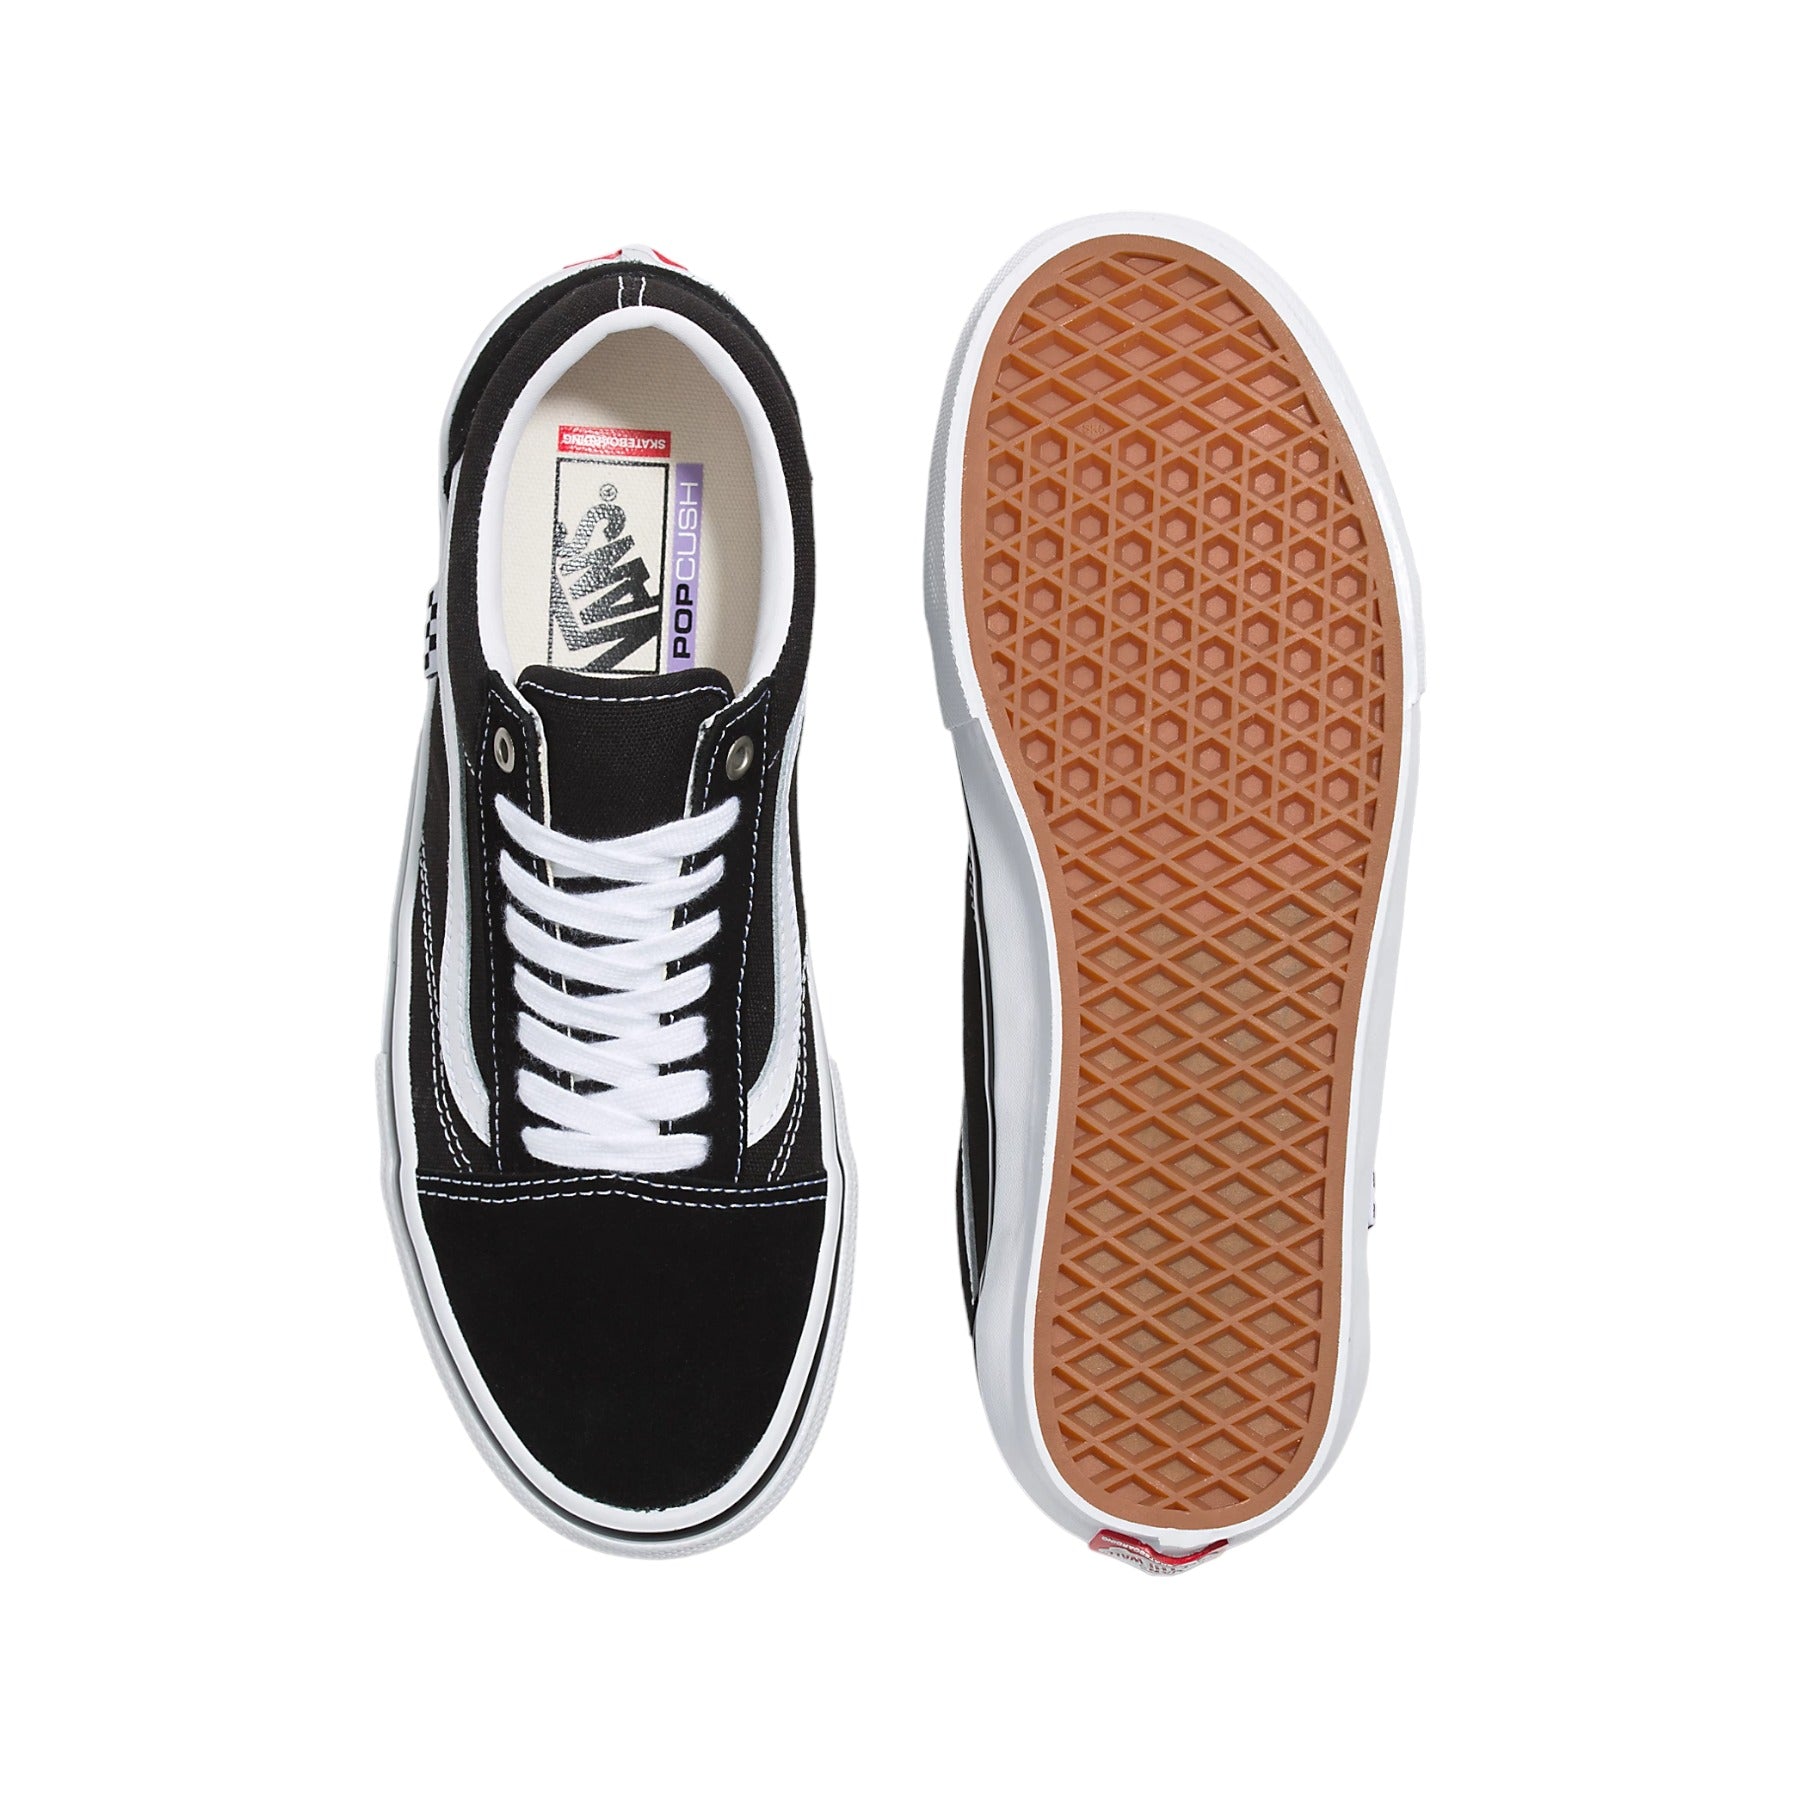 Vans Skate Old Skool Shoes - Black/White